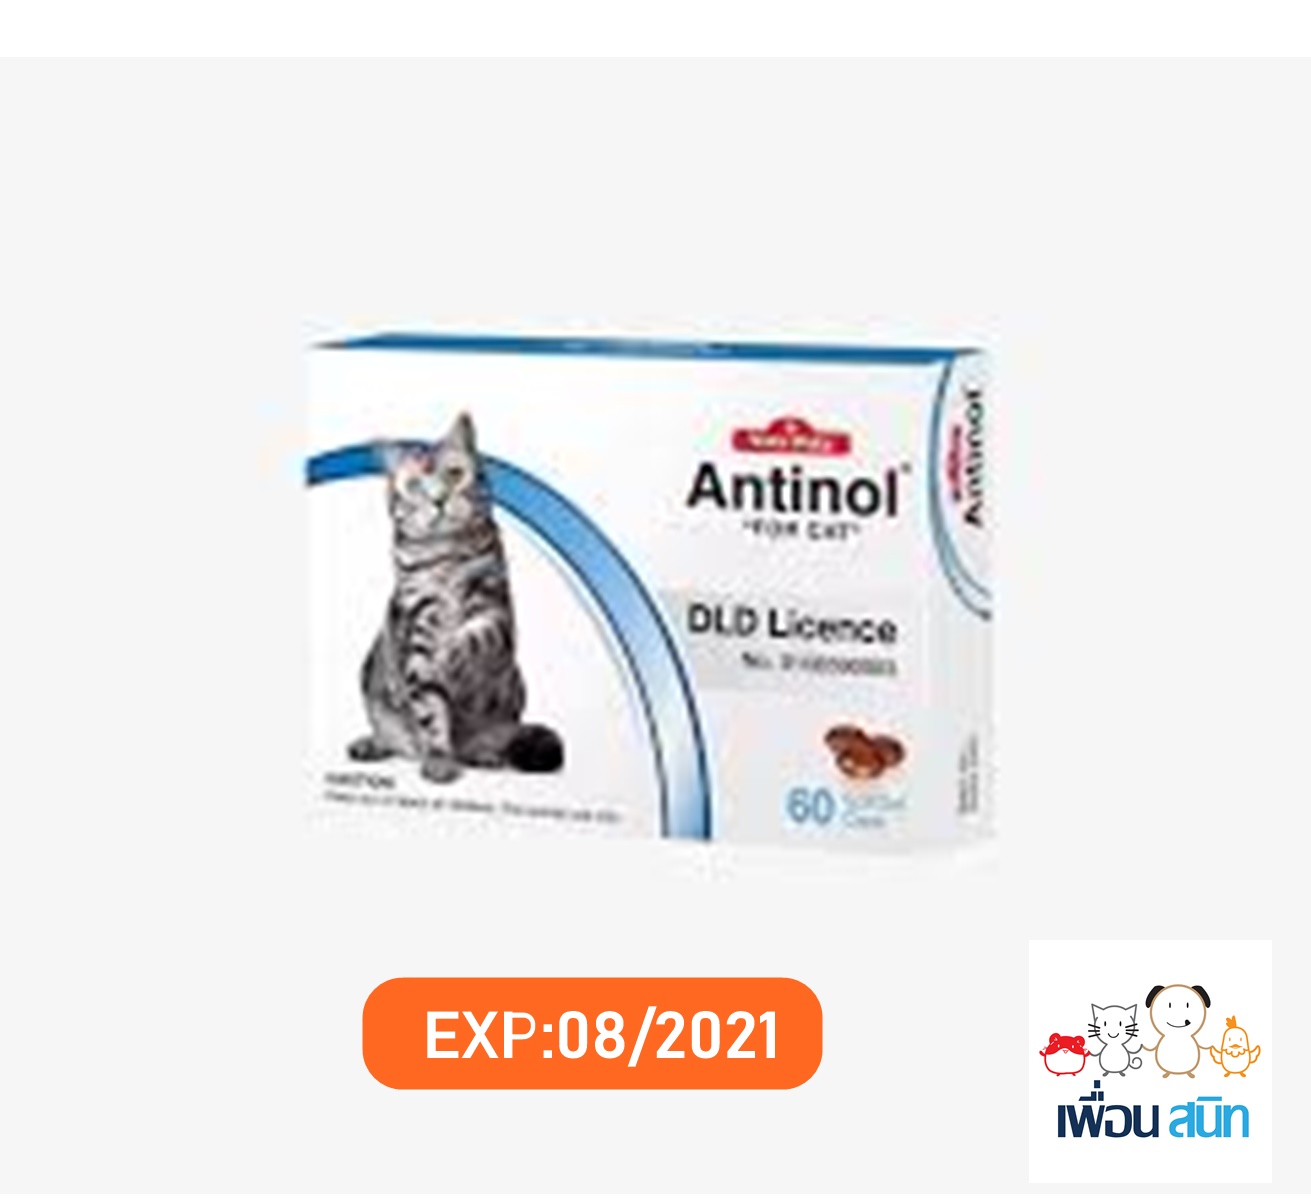 Antinol natural 100t อาหารเสริม ลดอักเสบ บำรุงข้อ แมว ช่วยลดการระคายเคืองที่ผิวหนัง สารสกัดจากธรรมชาติ 60 caps ( แมว )